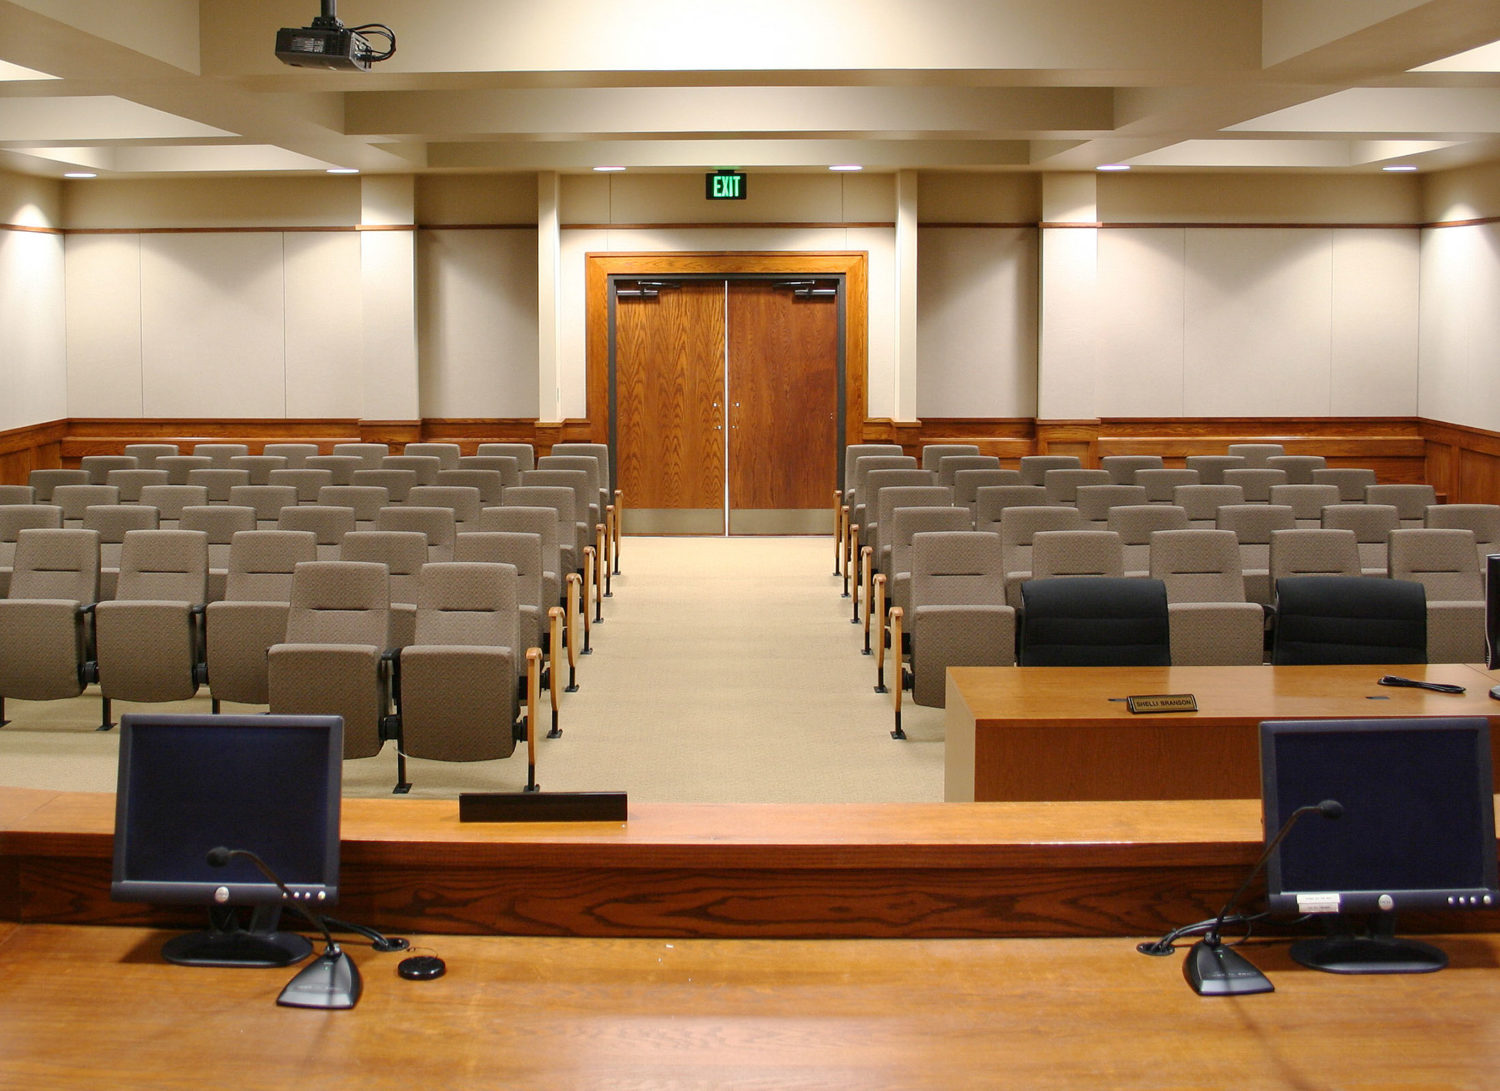 Clarity Auditorium Seats located in Westworth Village City Hall - Westworth Village, TX